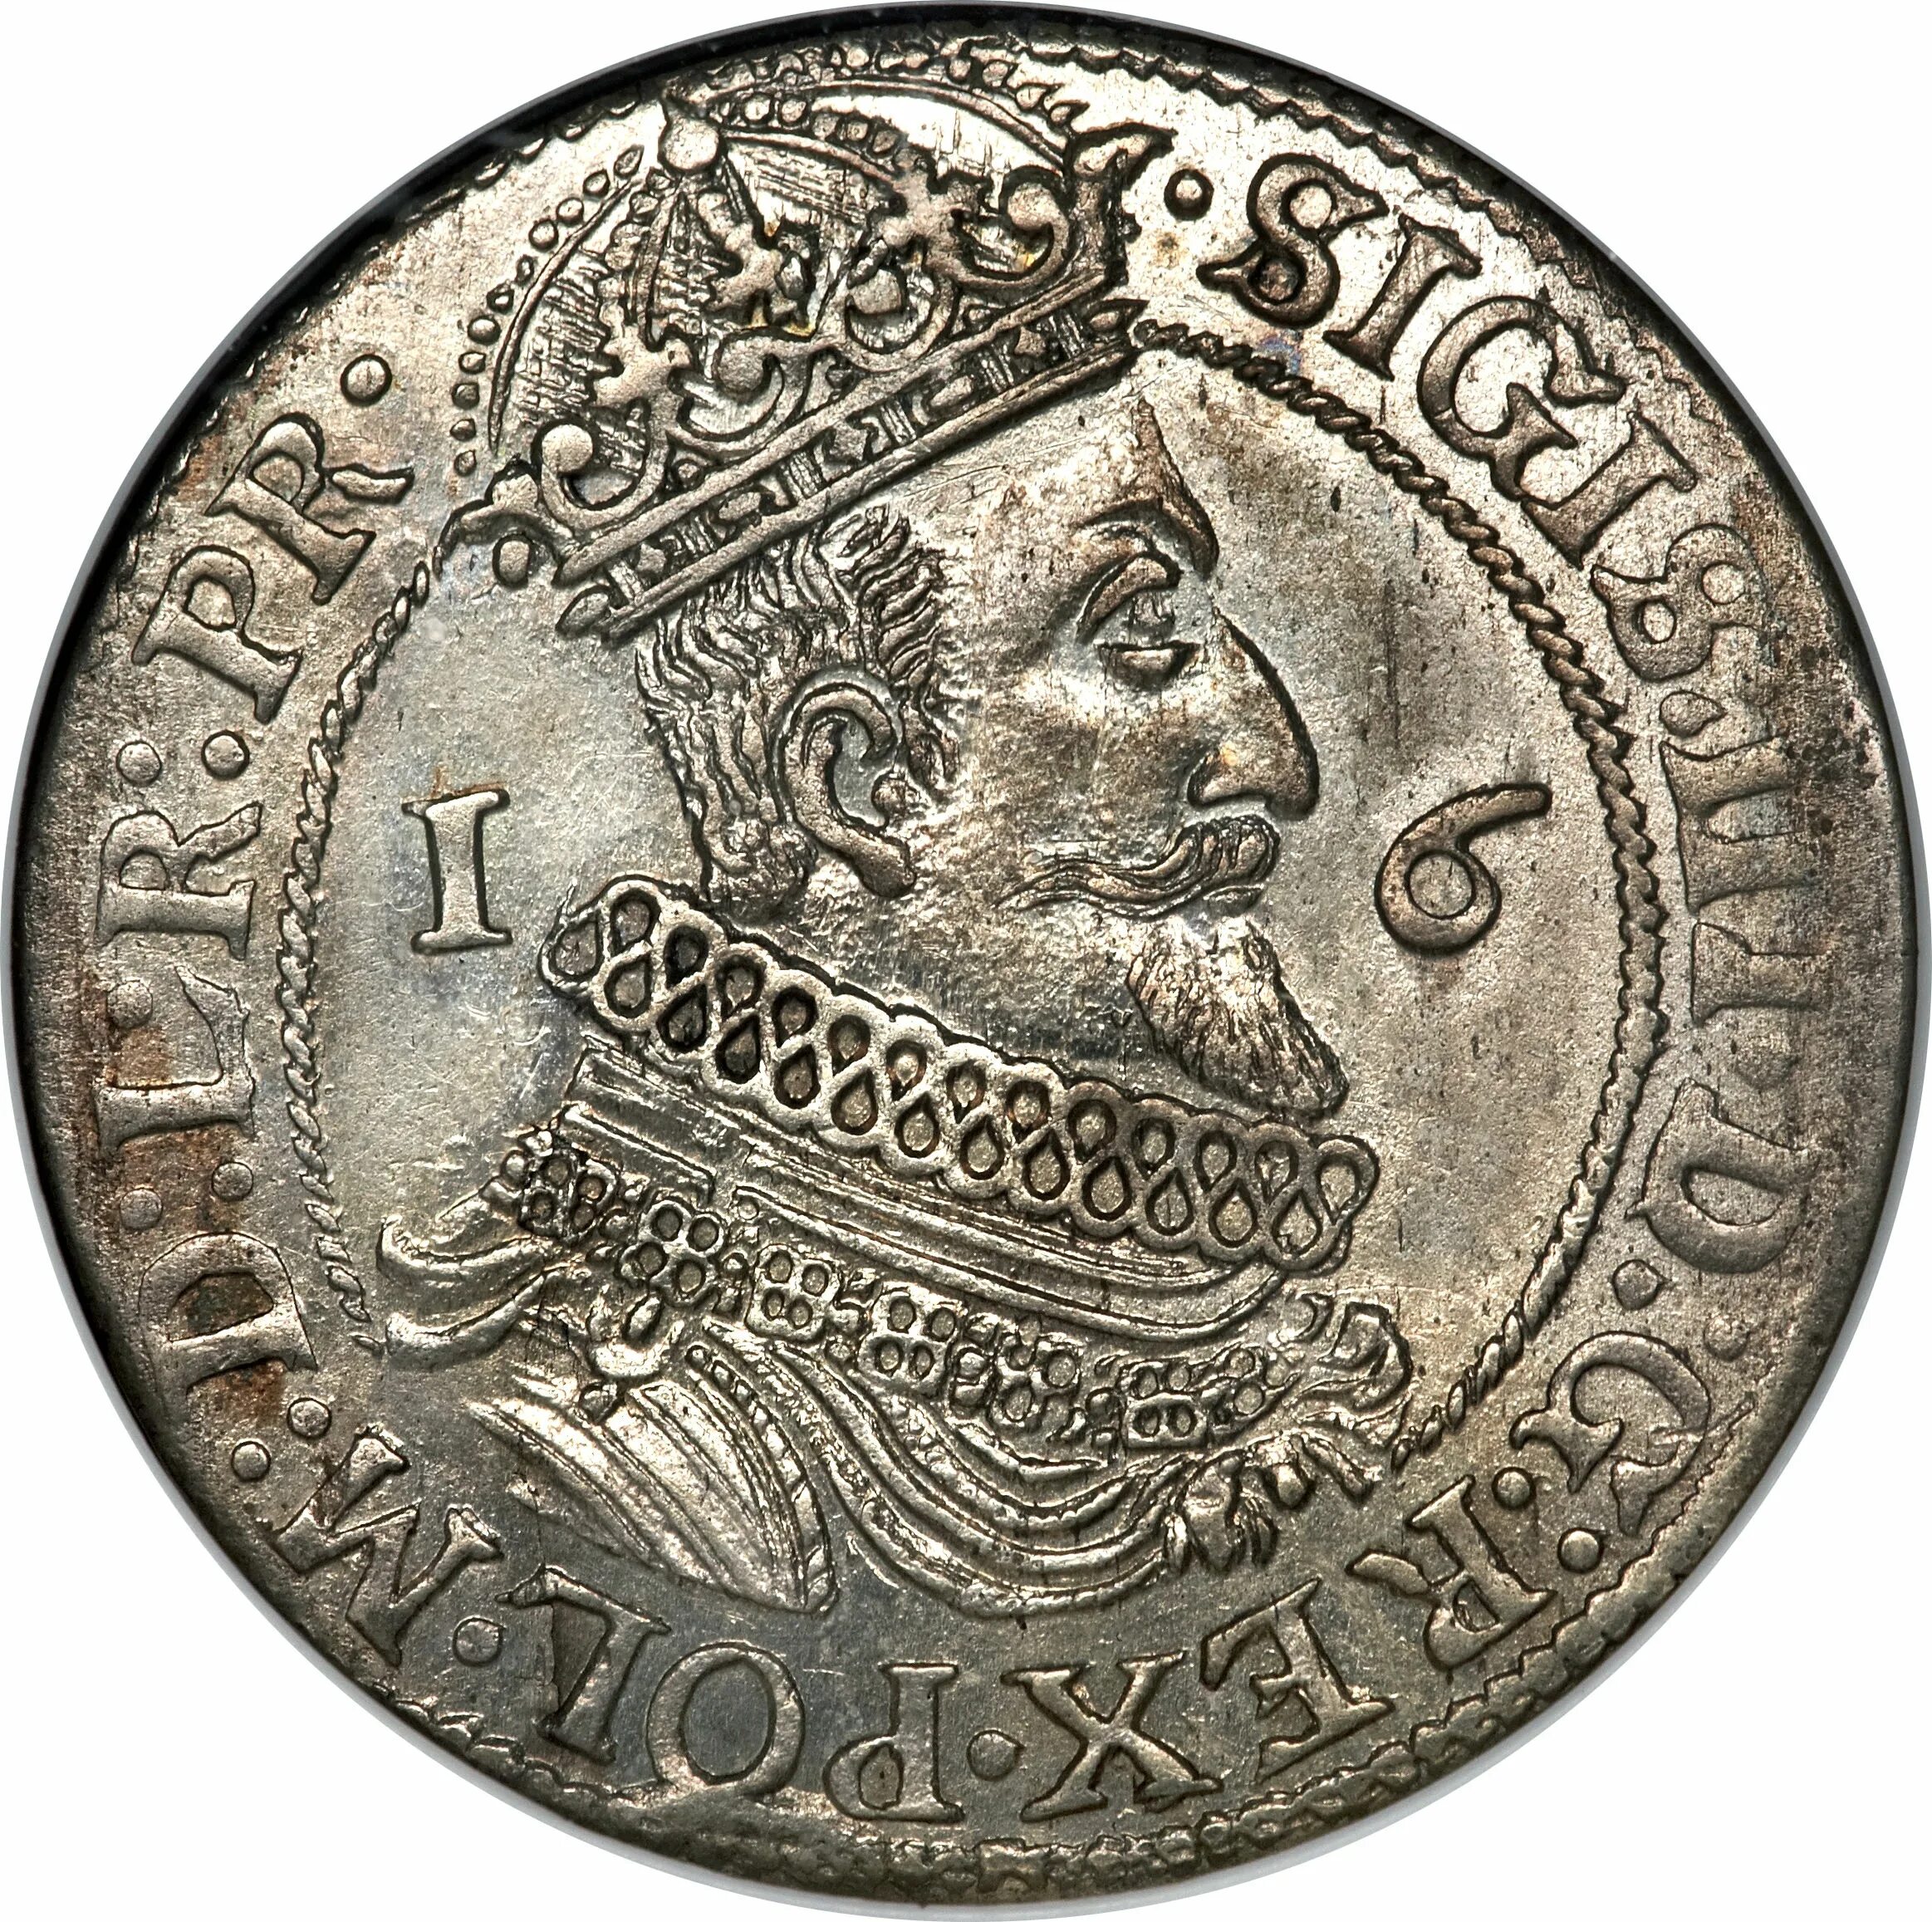 Монета речь посполита. Монеты речи Посполитой. Монеты речи Посполитой Сигизмунд. Монеты речь Посполитая 1623. Полторак монета речи Посполитой.